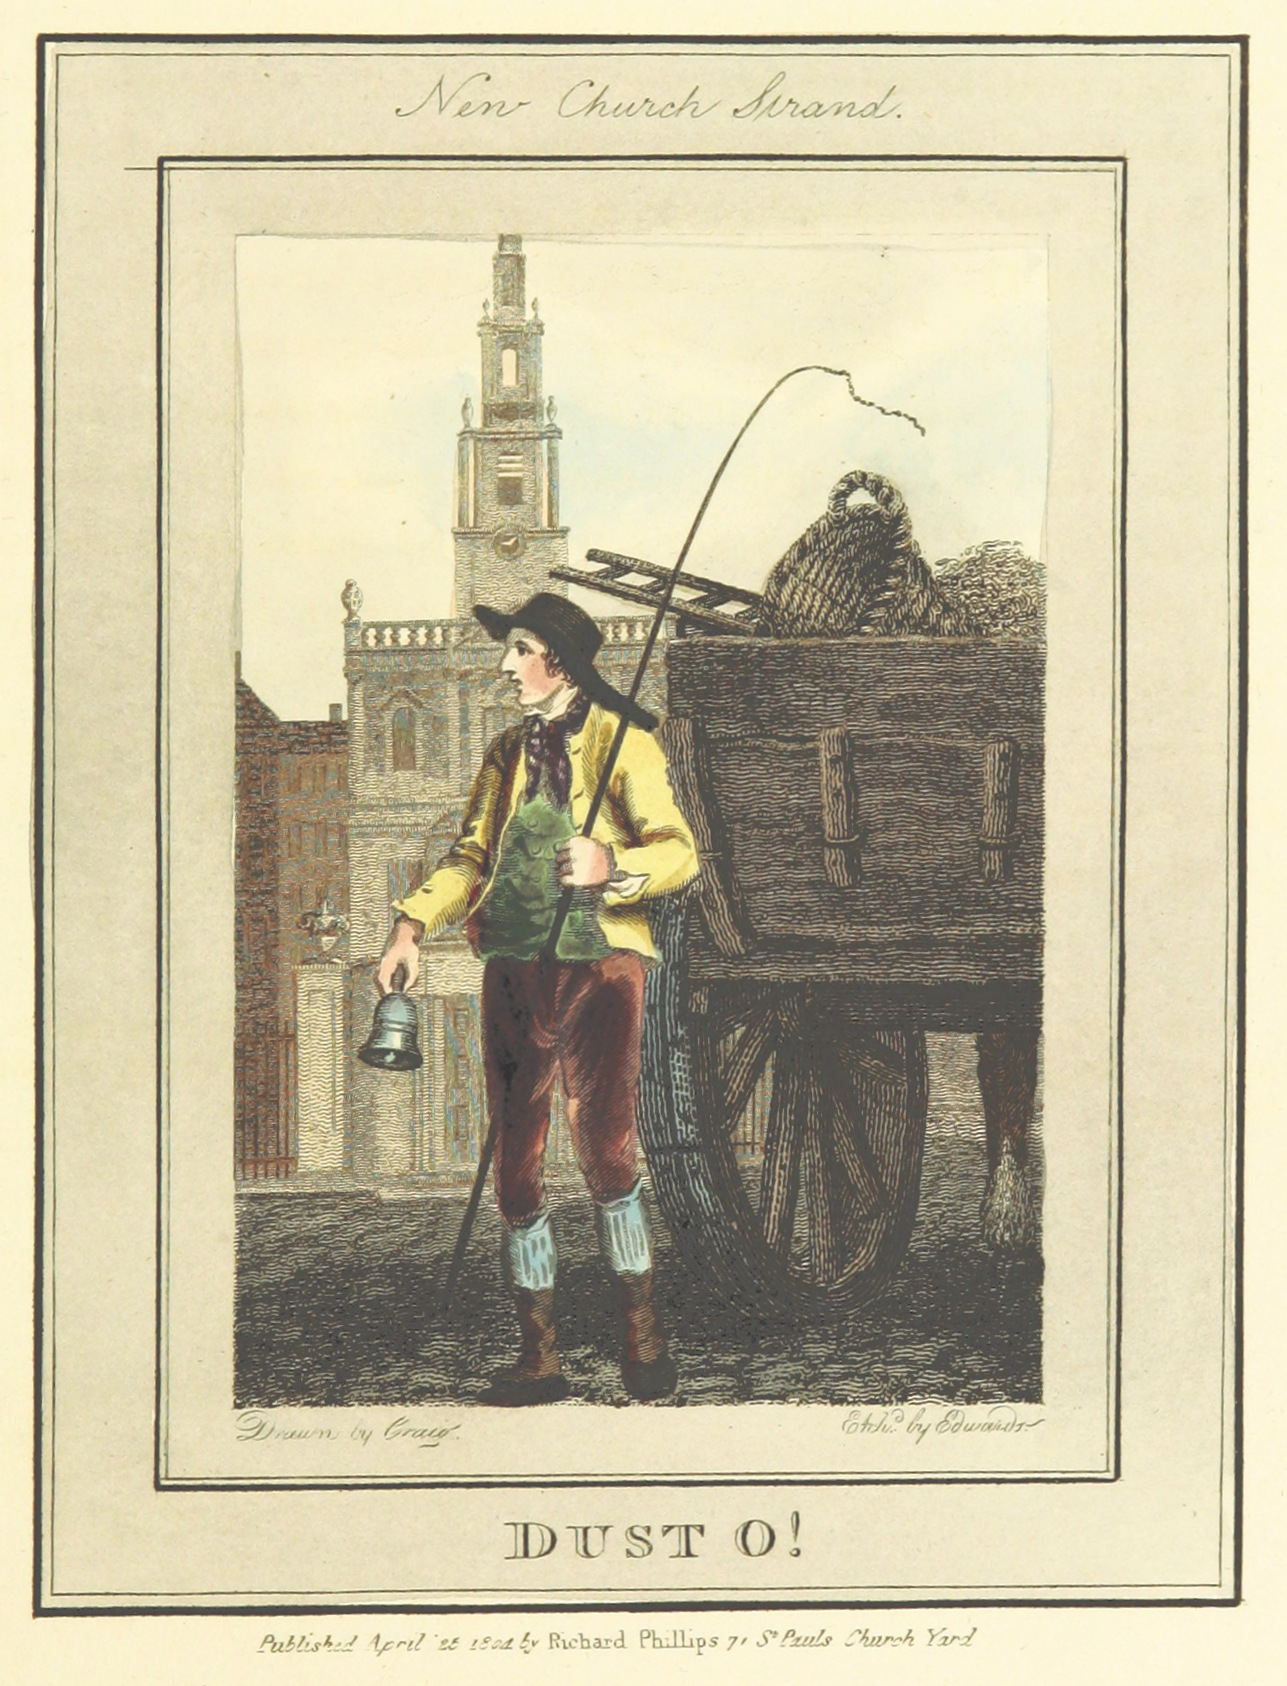 Phillips(1804)_p593_-_New_Church_Strand_-_Dust_O!